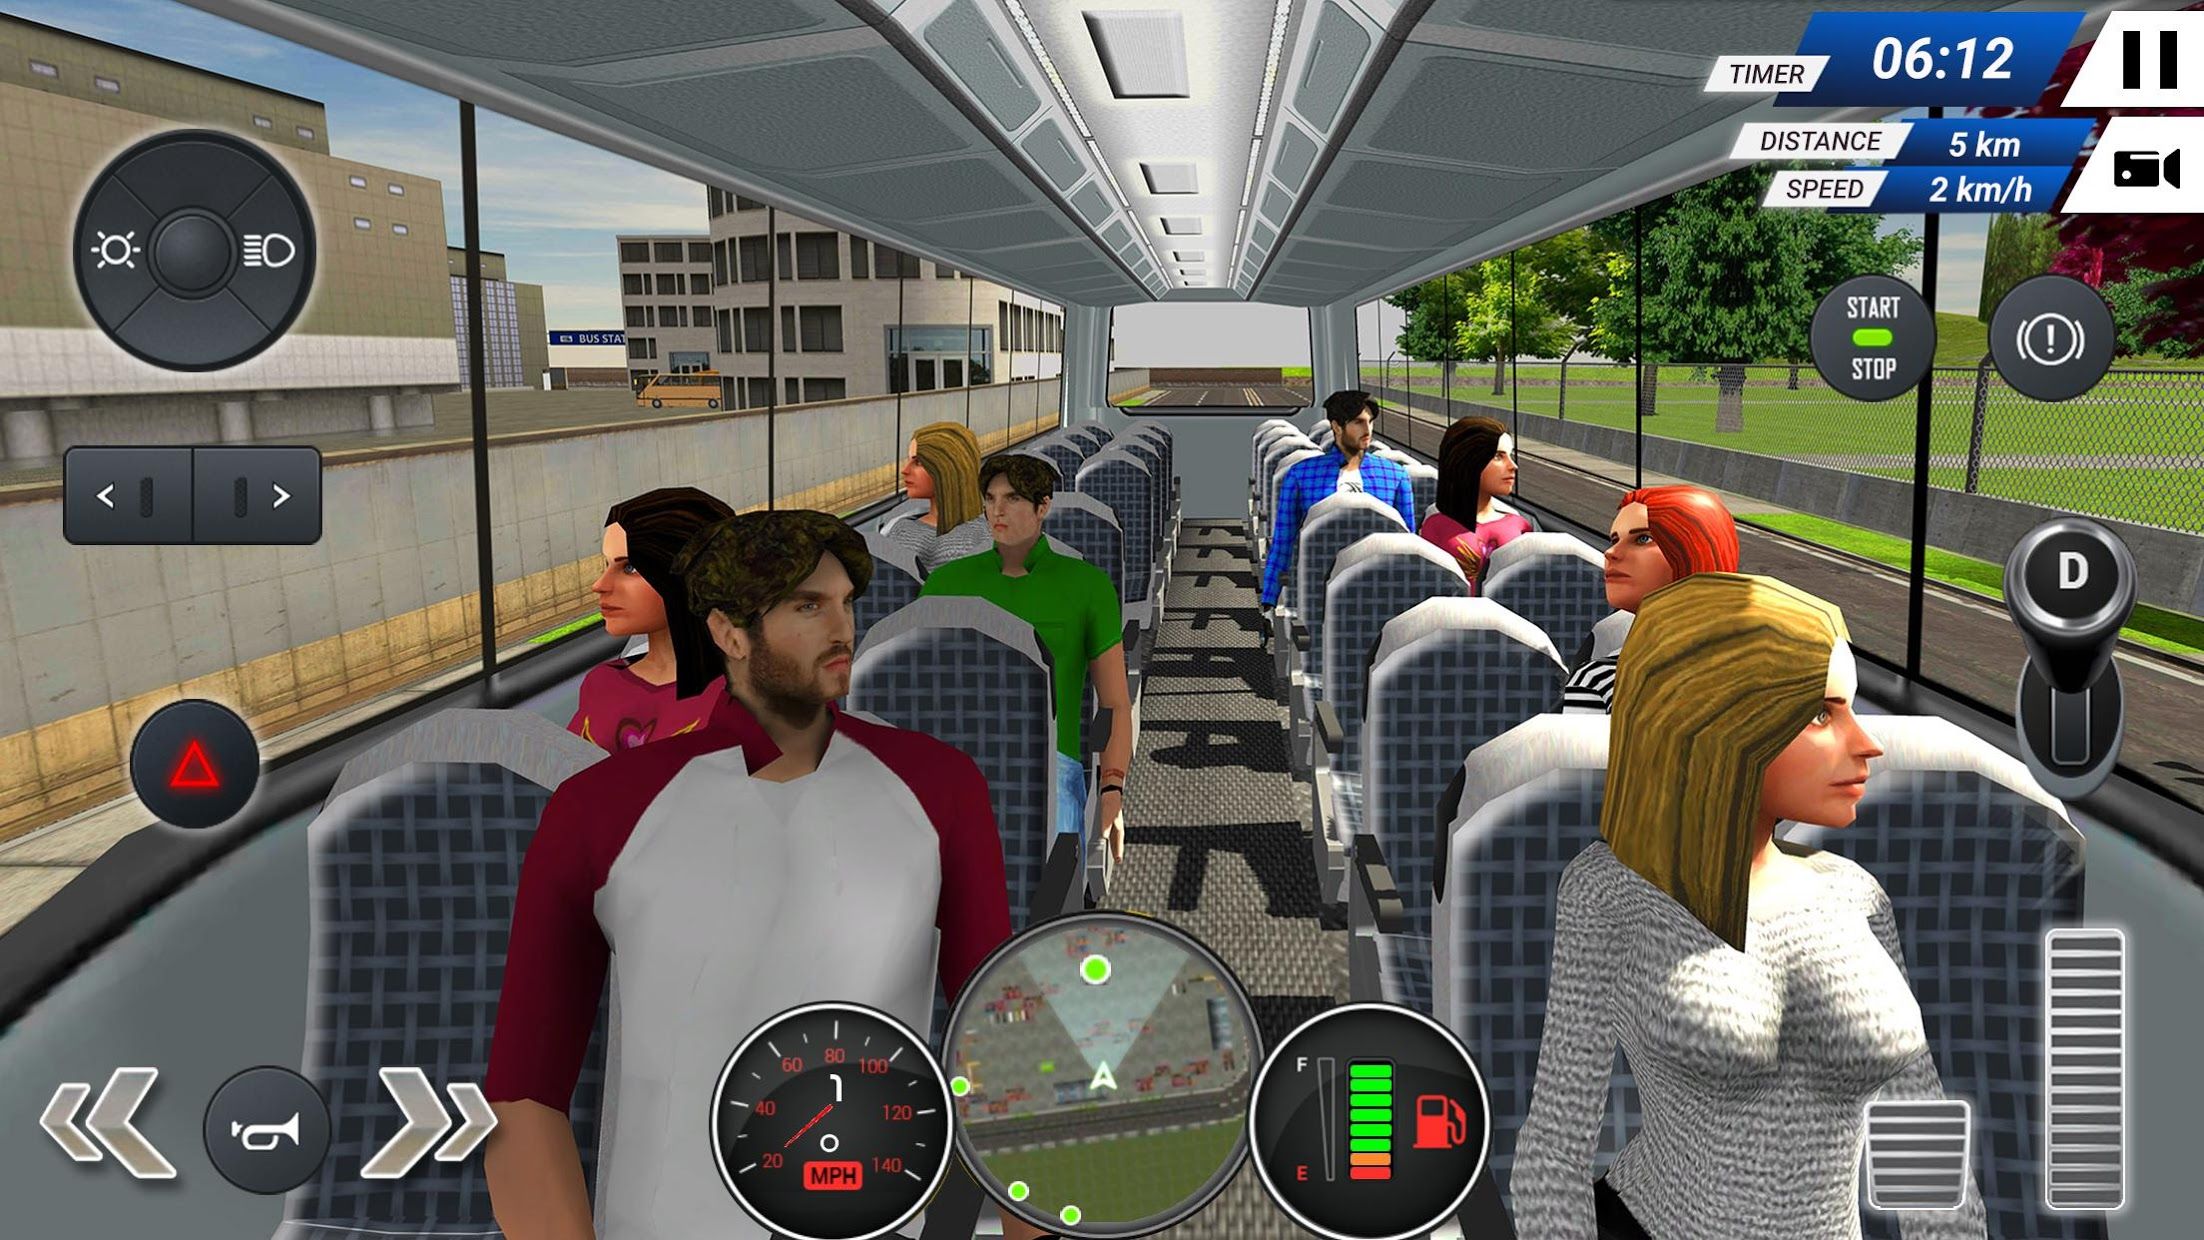 公交车模拟器2019  - 免费 - Bus Simulator 2019 - Free